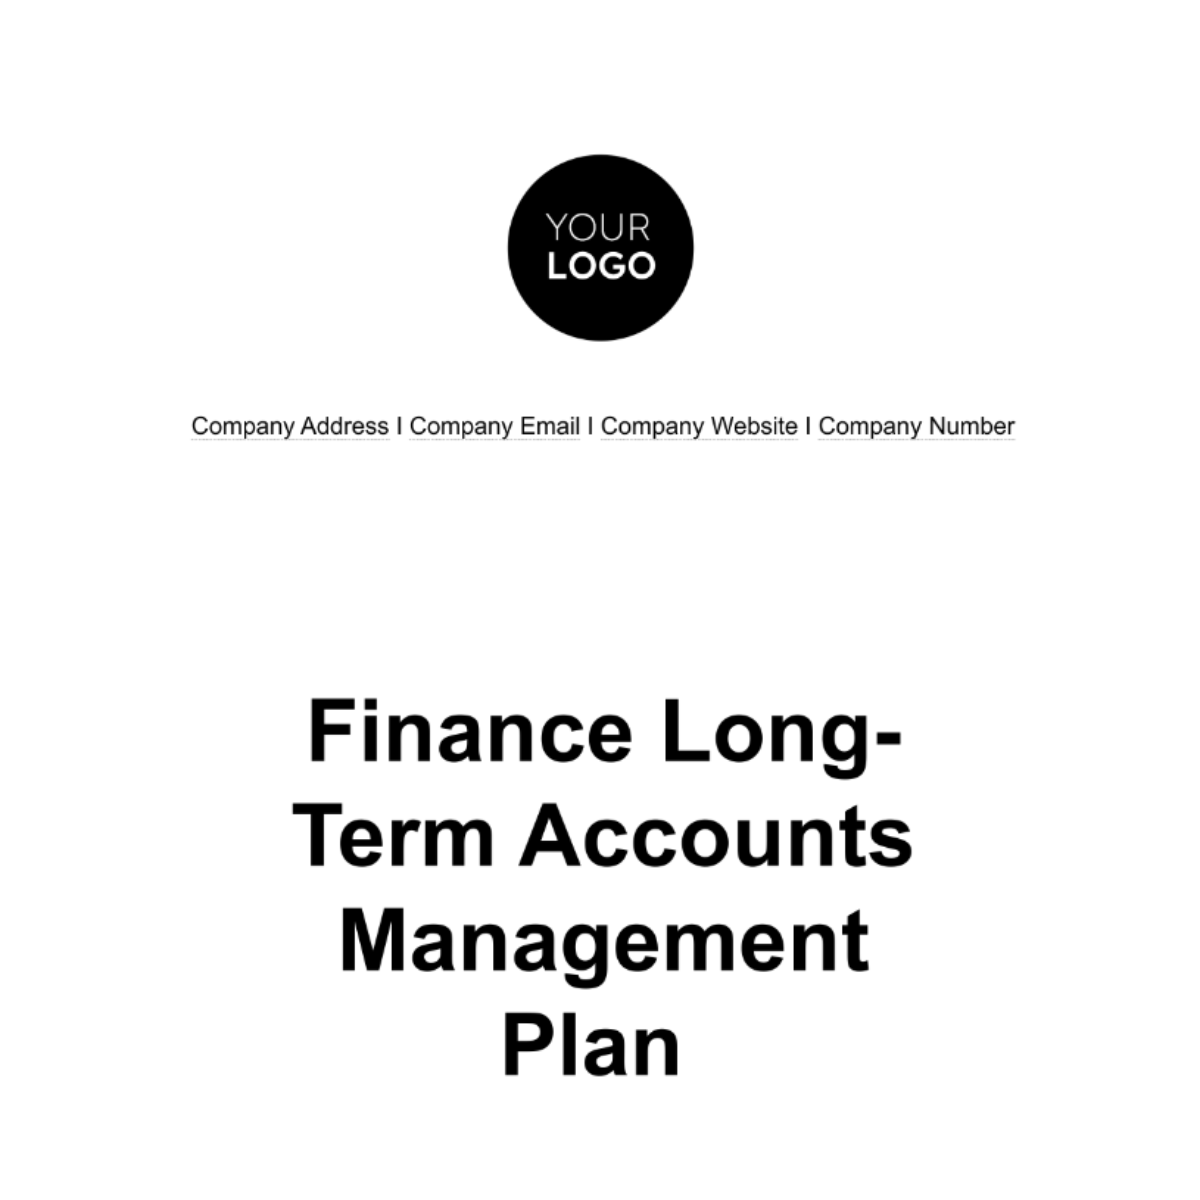 Finance Long-Term Accounts Management Plan Template